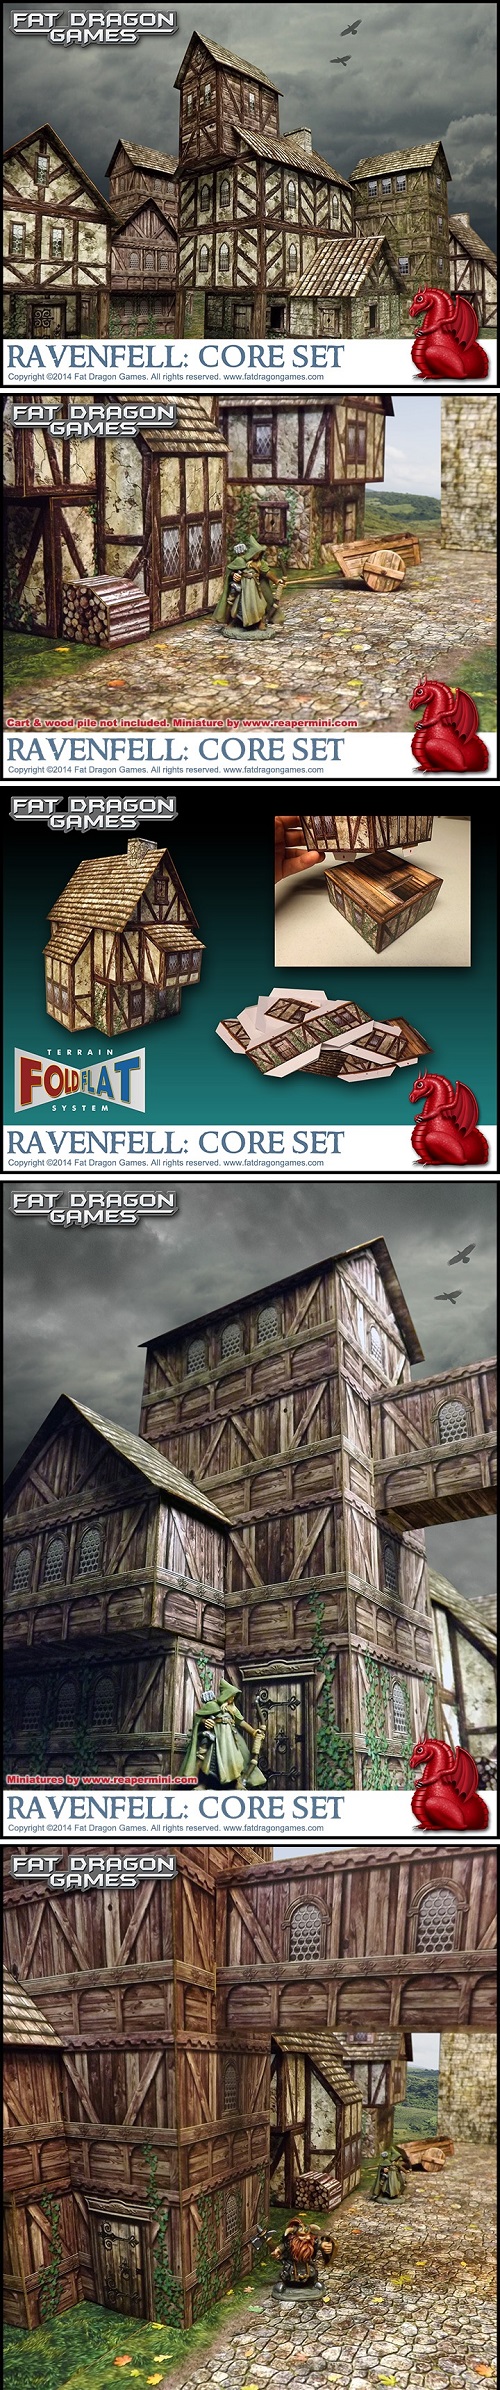 Ravenfell